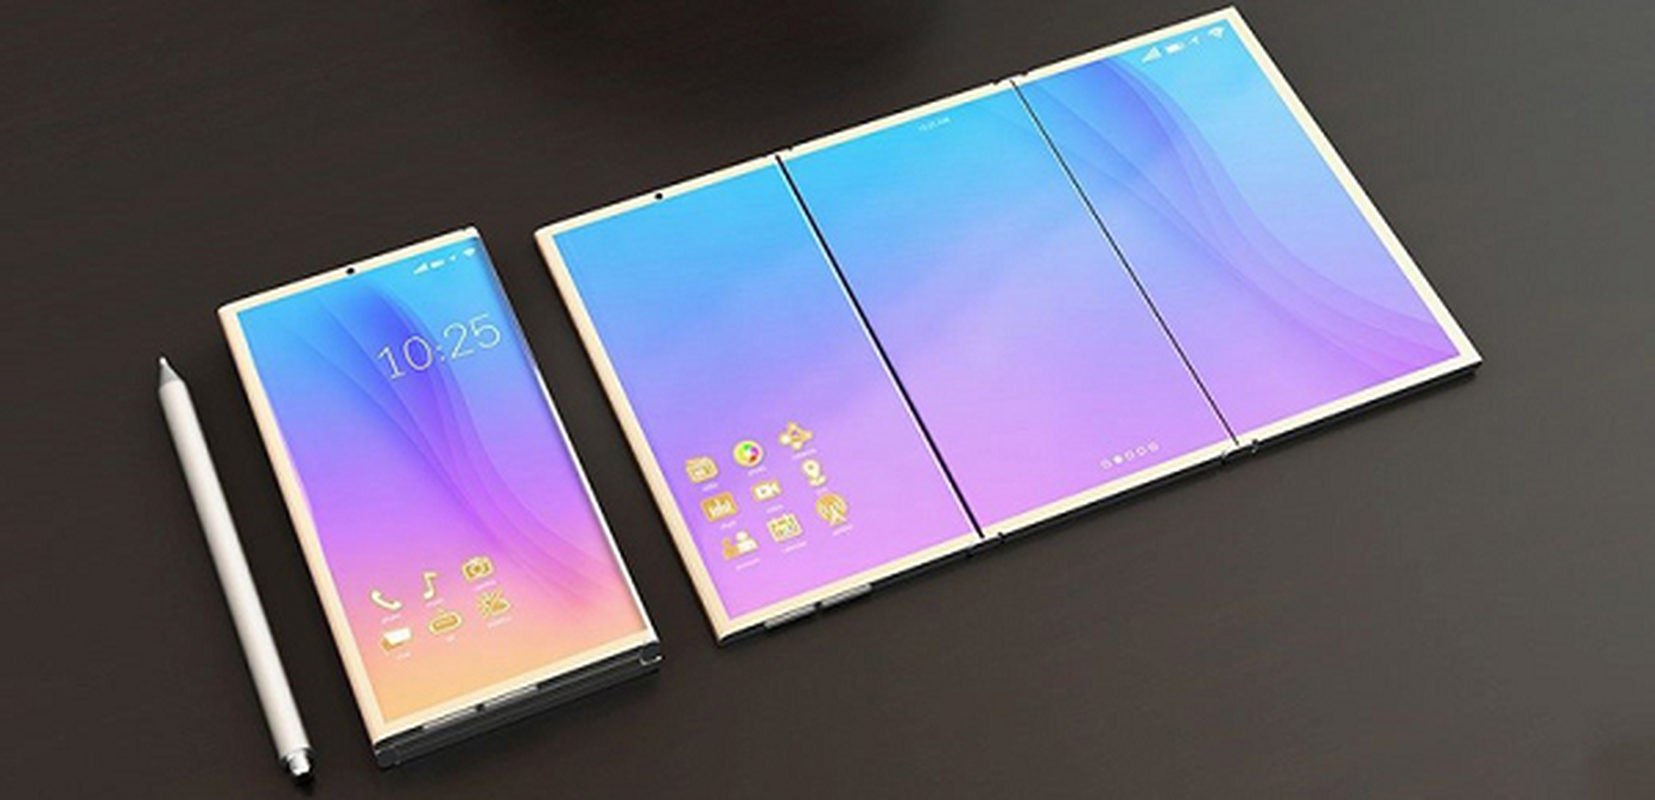 Soi can canh tablet ba man hinh gap cua Samsung sap ra mat-Hinh-11